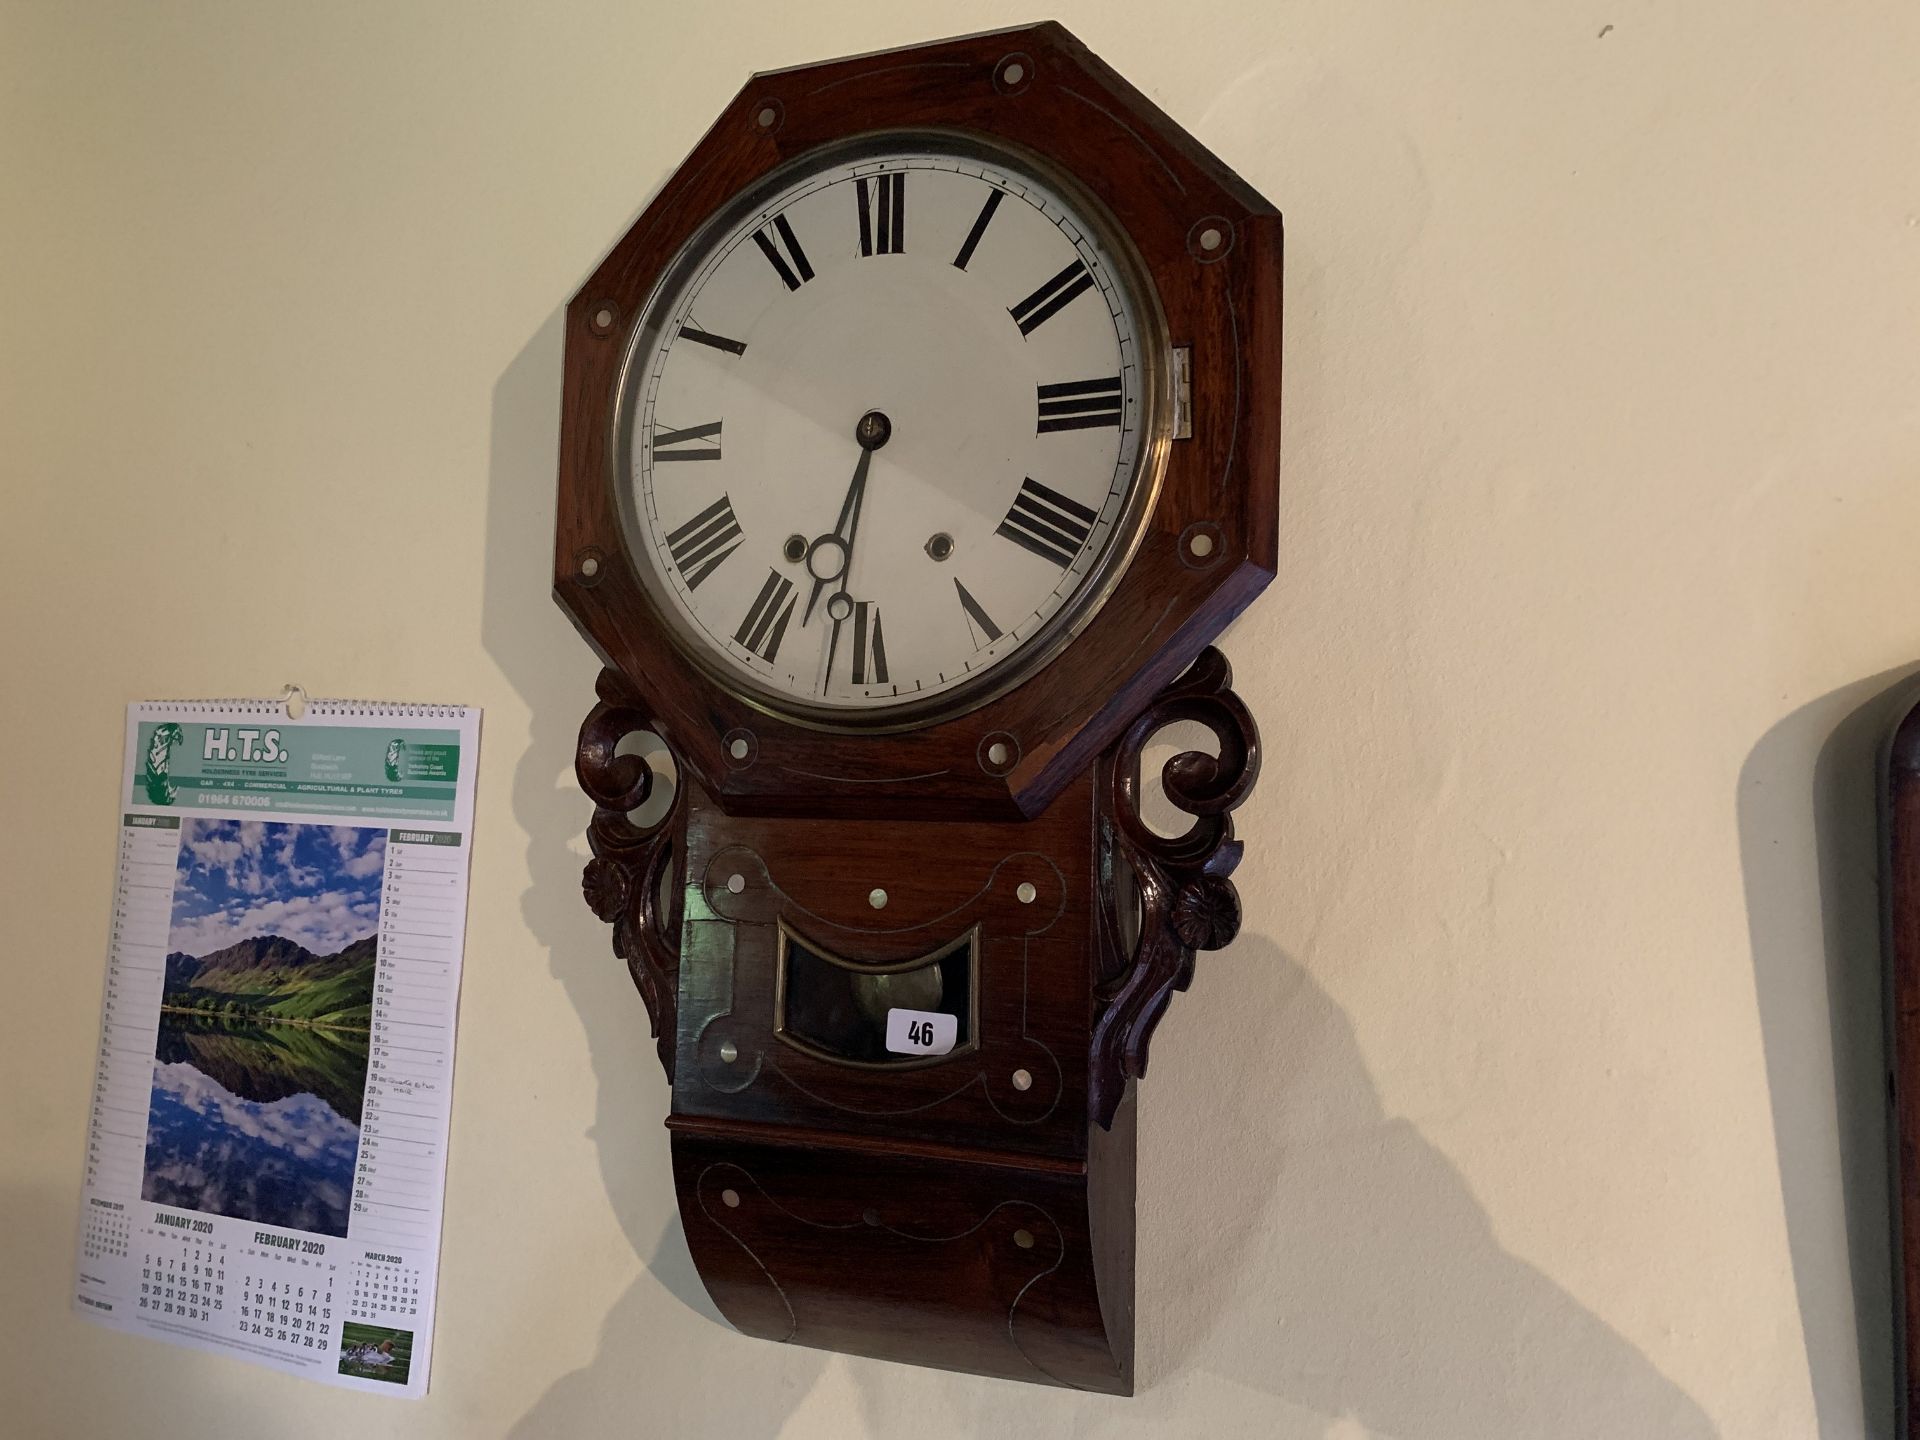 Octagonal wall clock